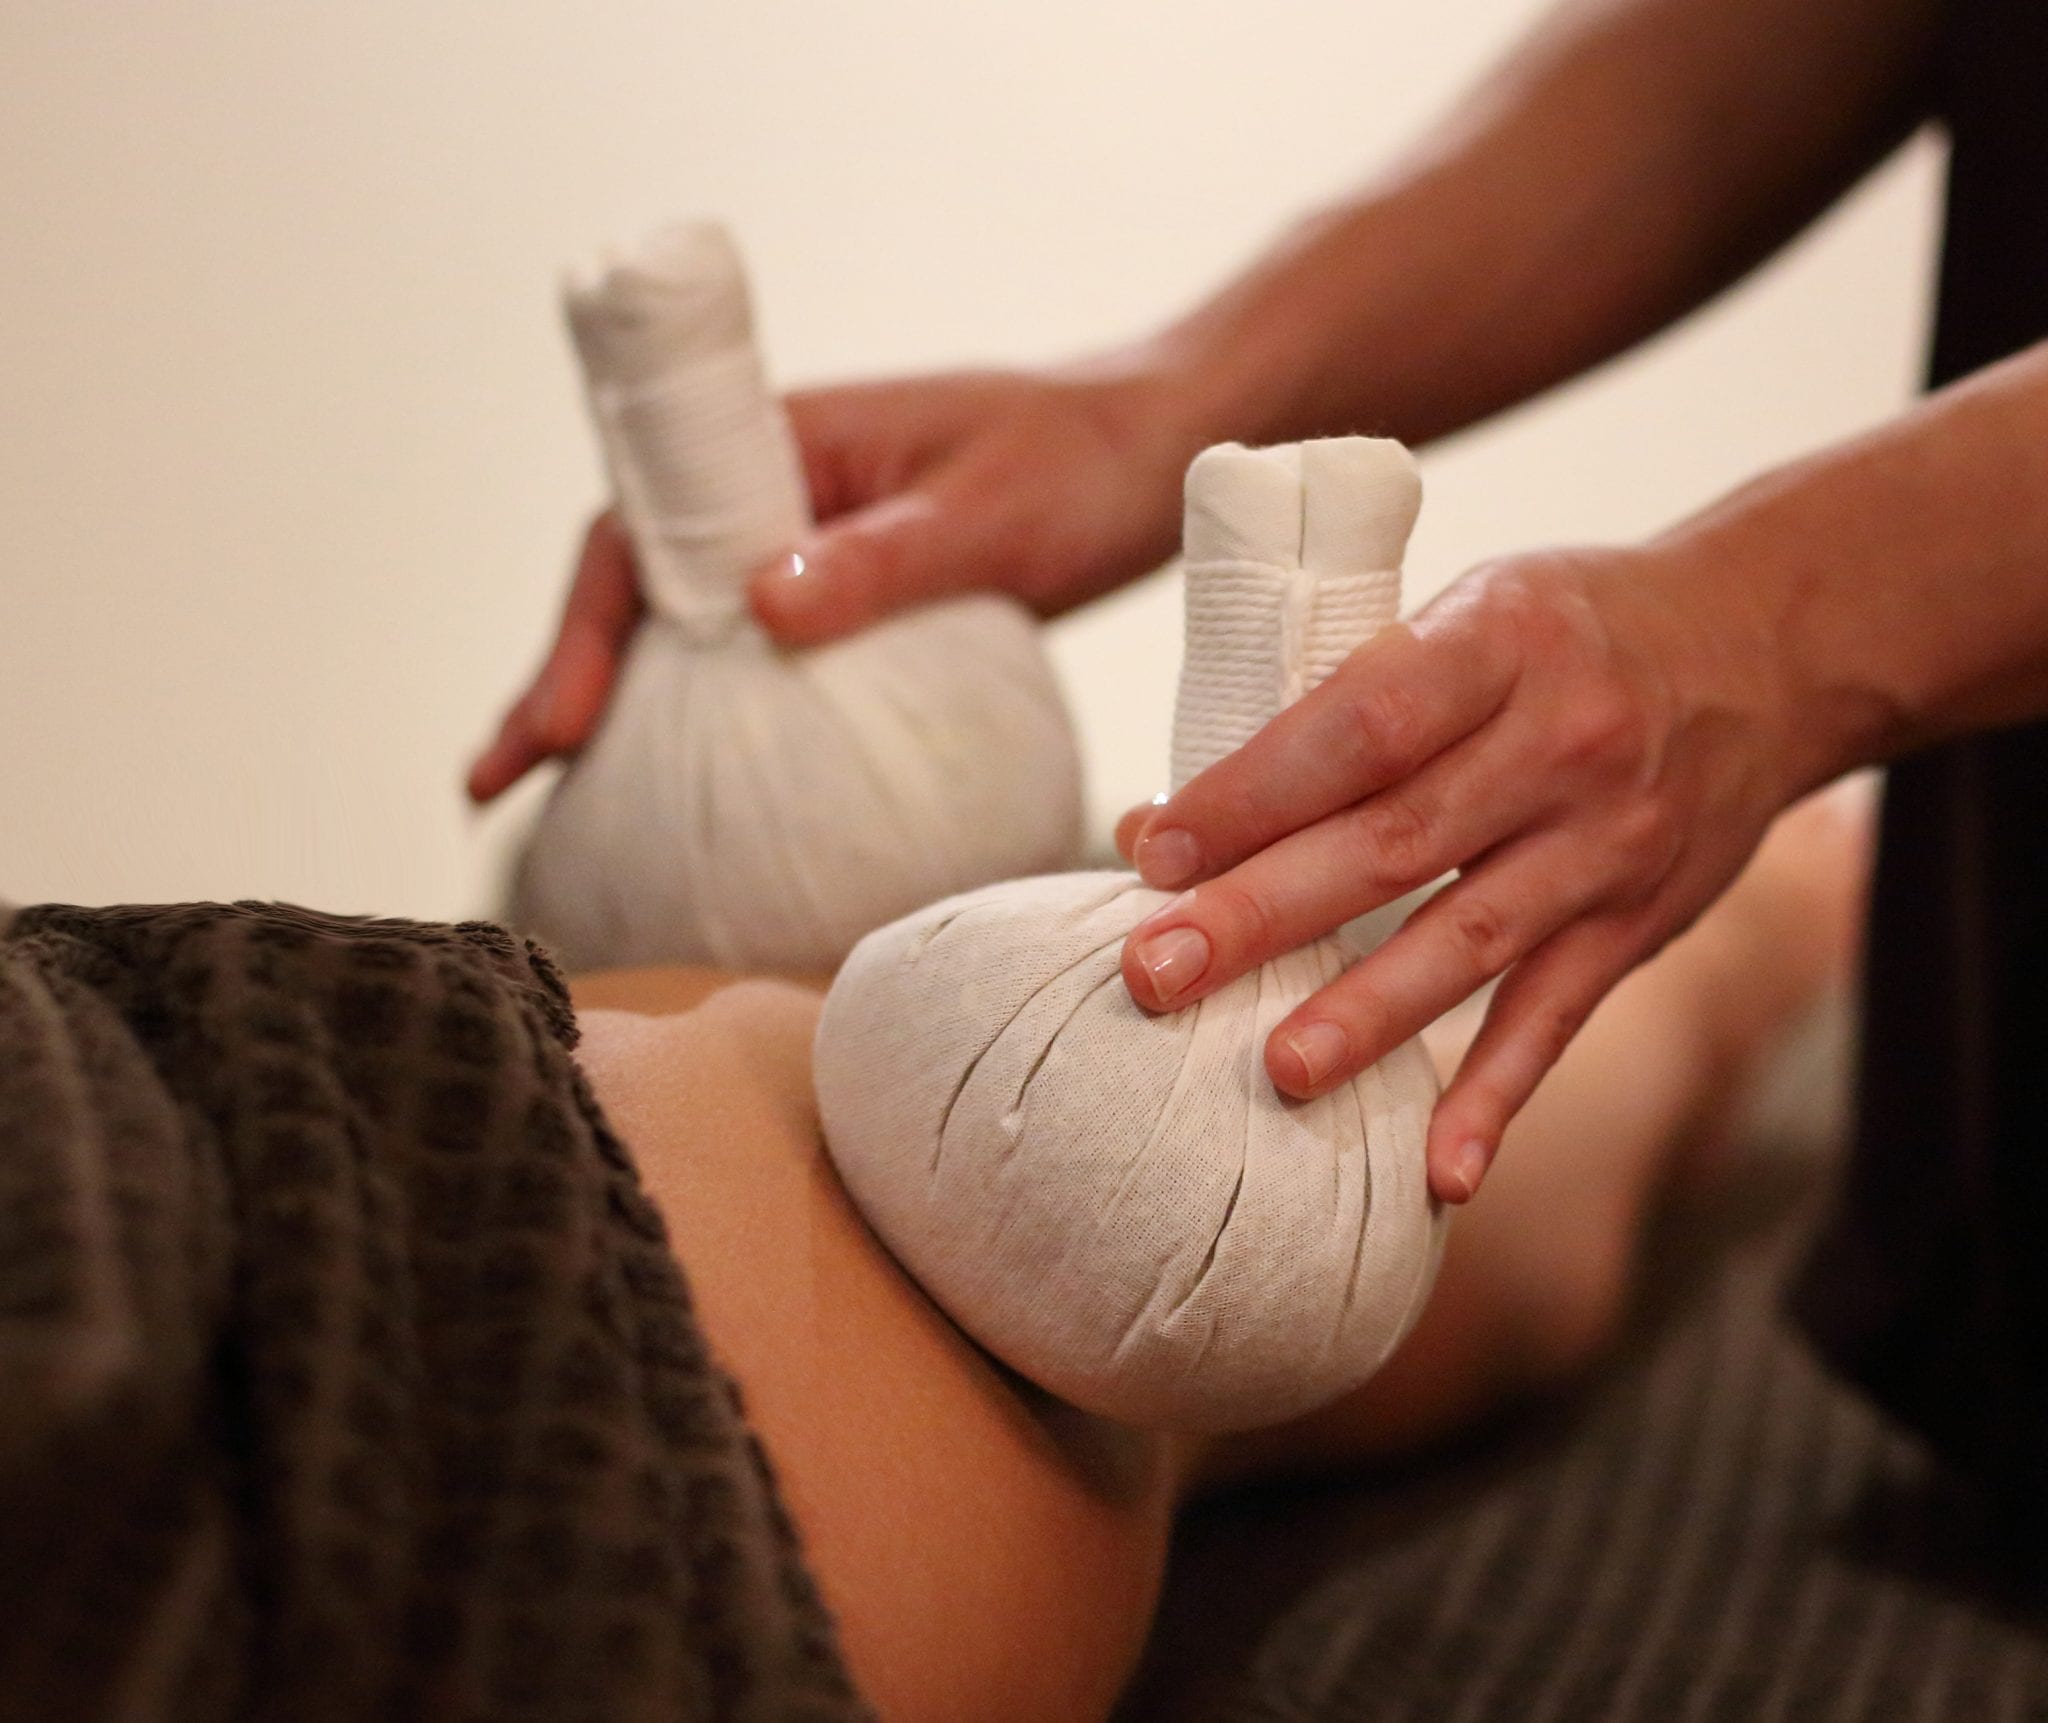 Hot Poultice Massage 55min - Includes 2 hour spa access